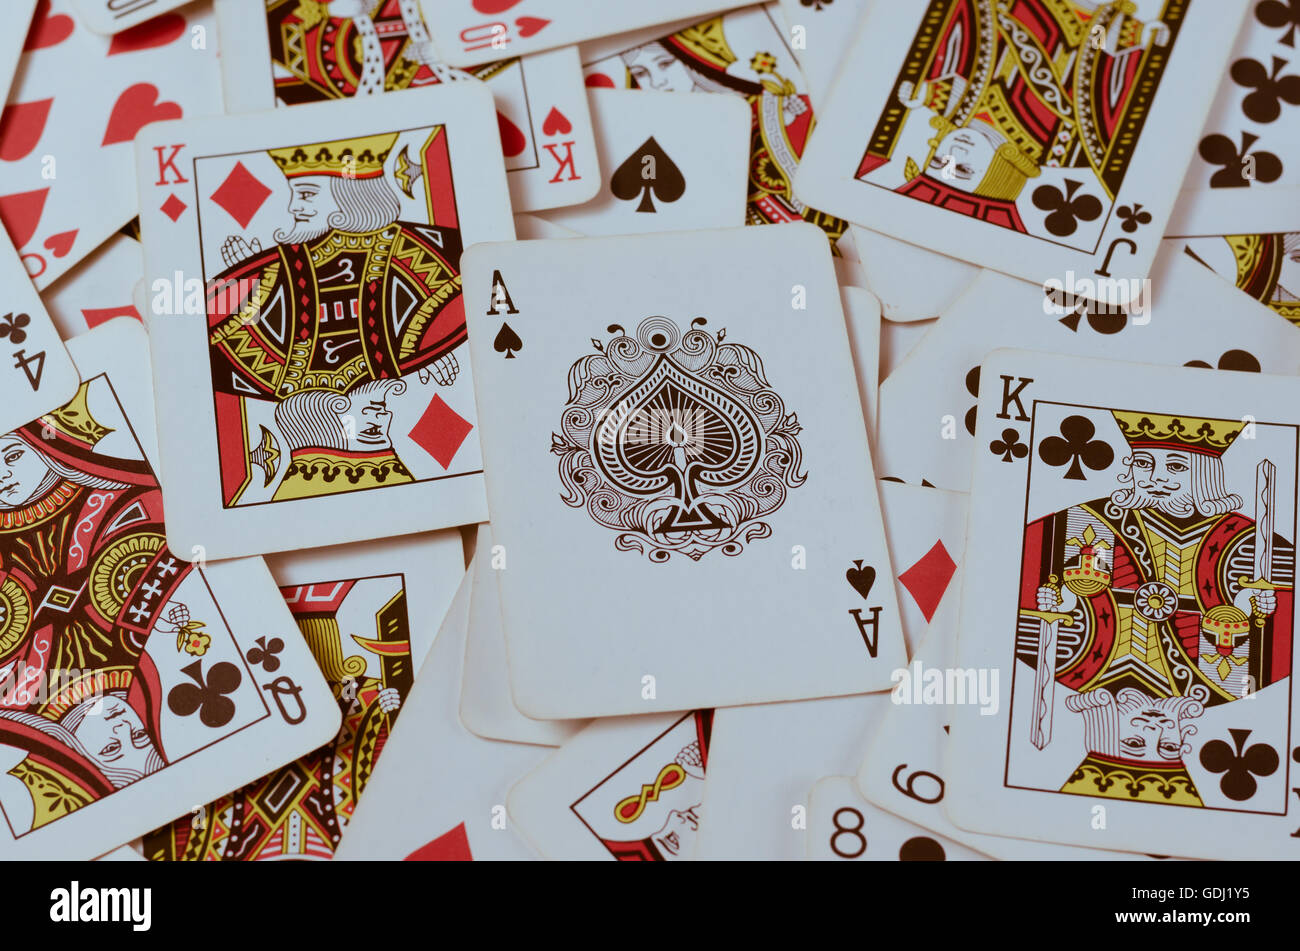 Der Poker Karte Anzug. Stockfoto